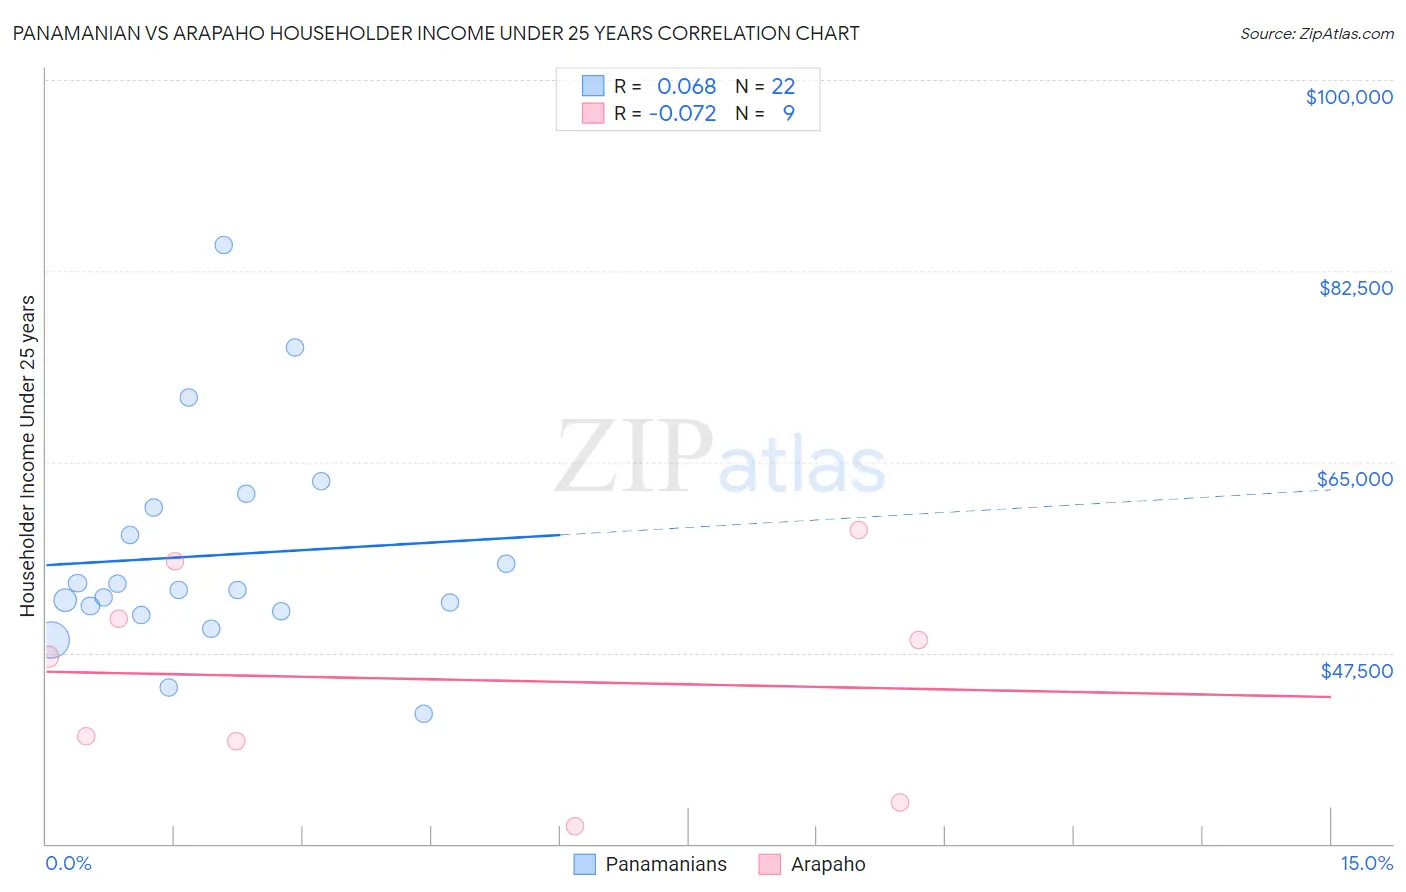 Panamanian vs Arapaho Householder Income Under 25 years